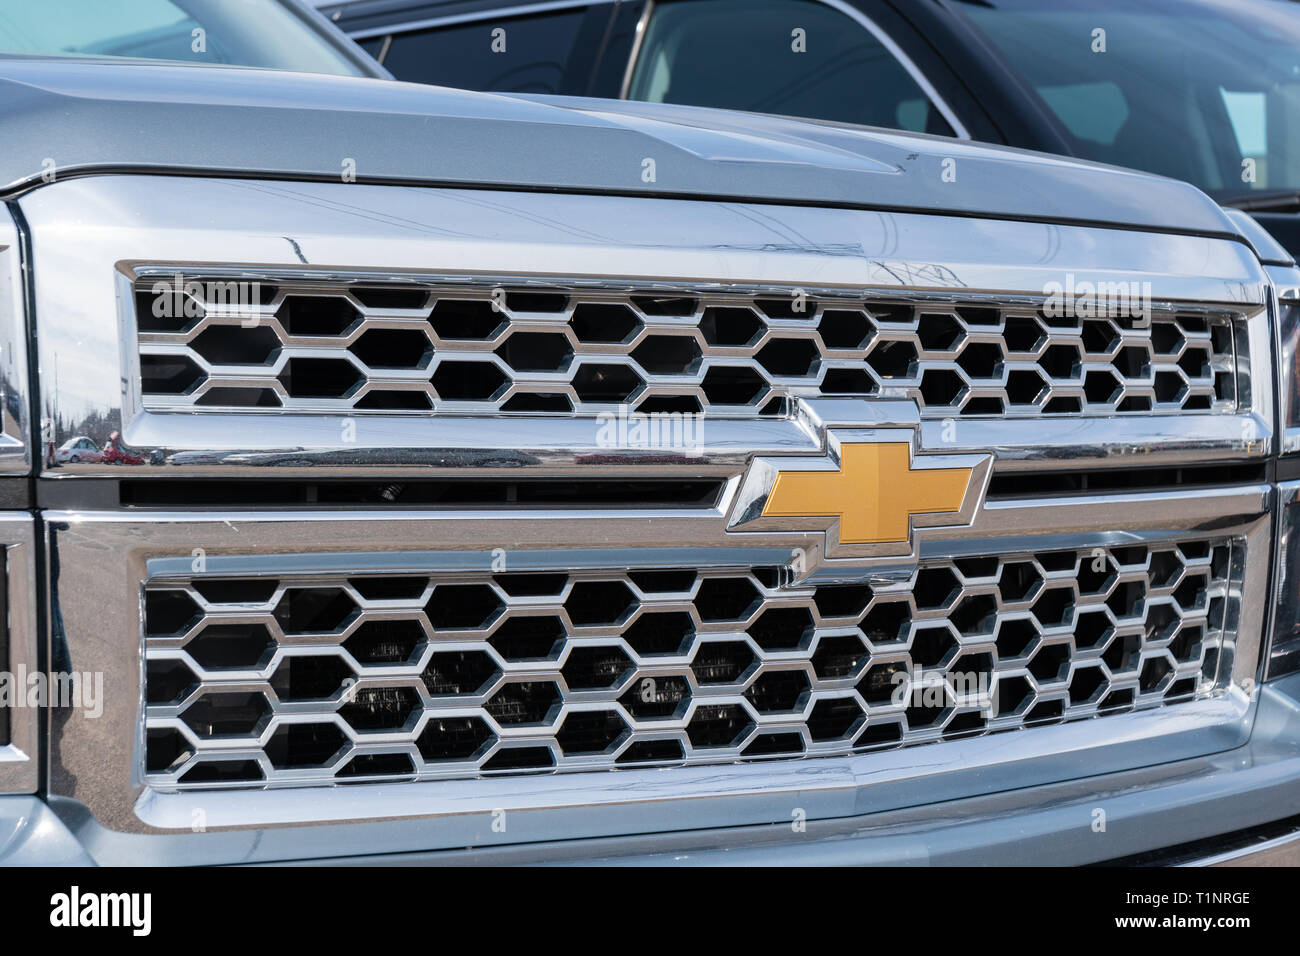 STILLWATER, MN/USA - MÄRZ 24, 2019: Chevrolet Automobil Lkw Kühlergrill und Logo. Stockfoto